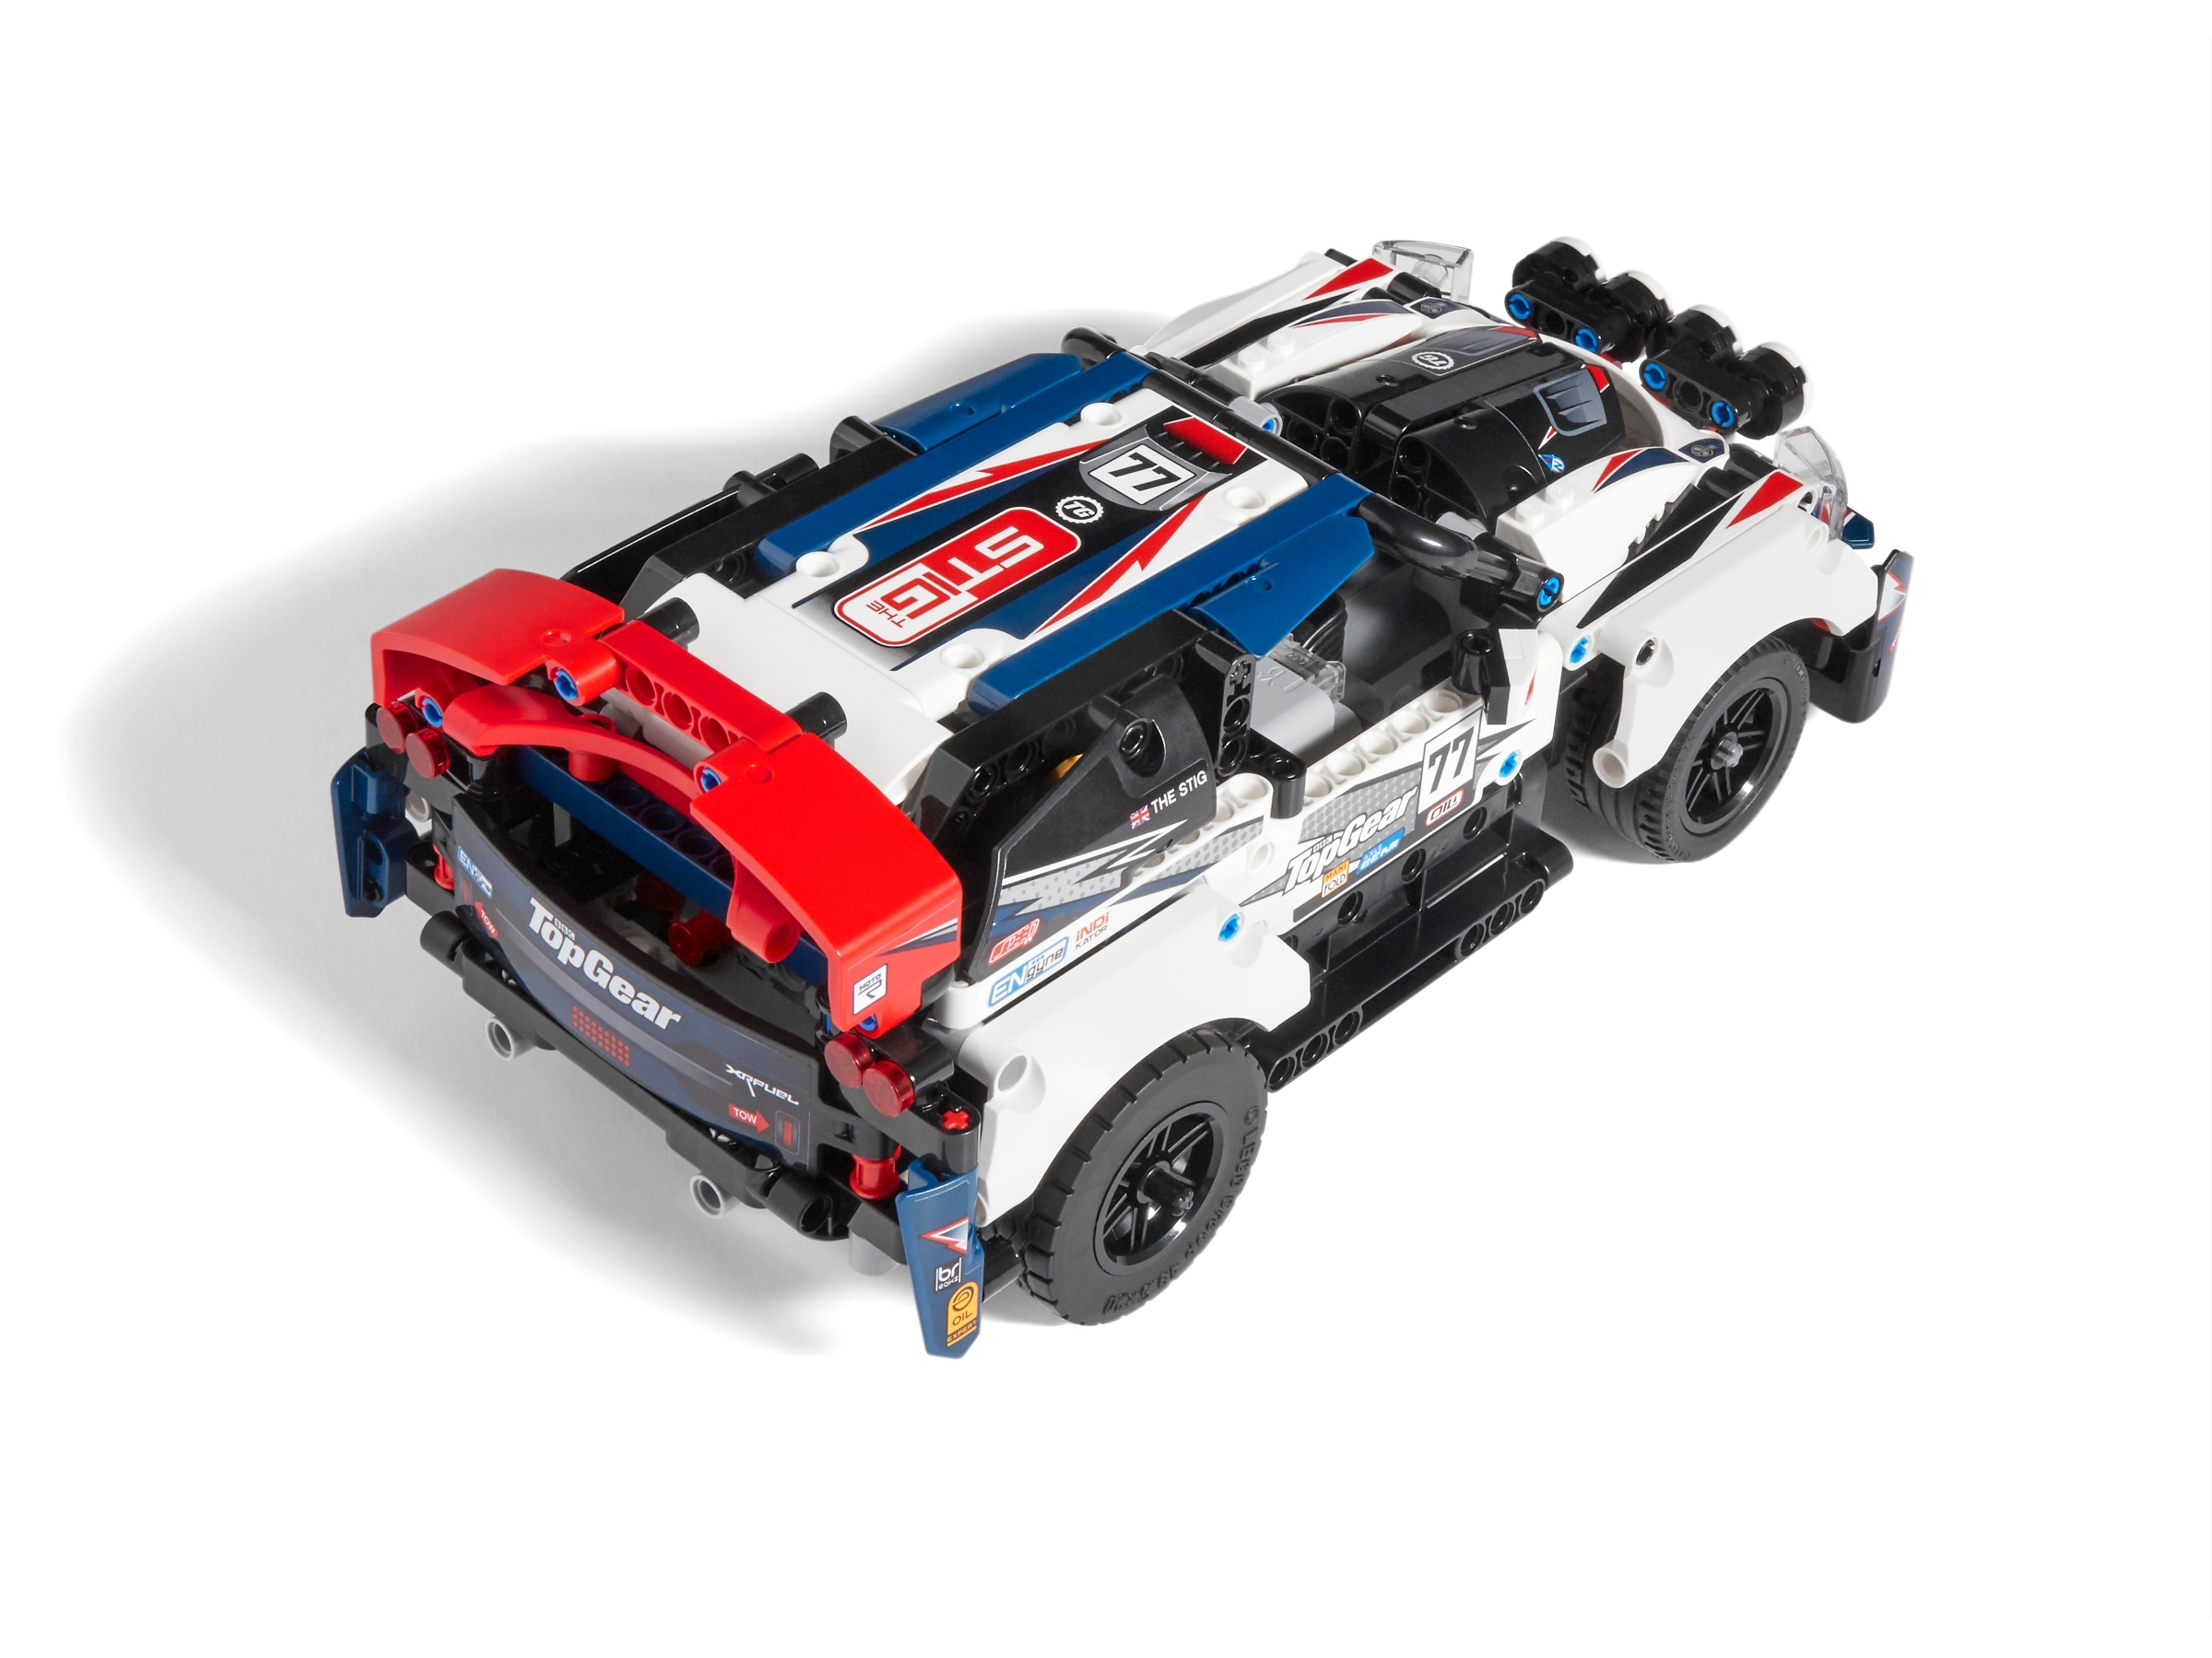 42109 Lego ® Design Tokens "Top Gear ralleyauto with App Control 